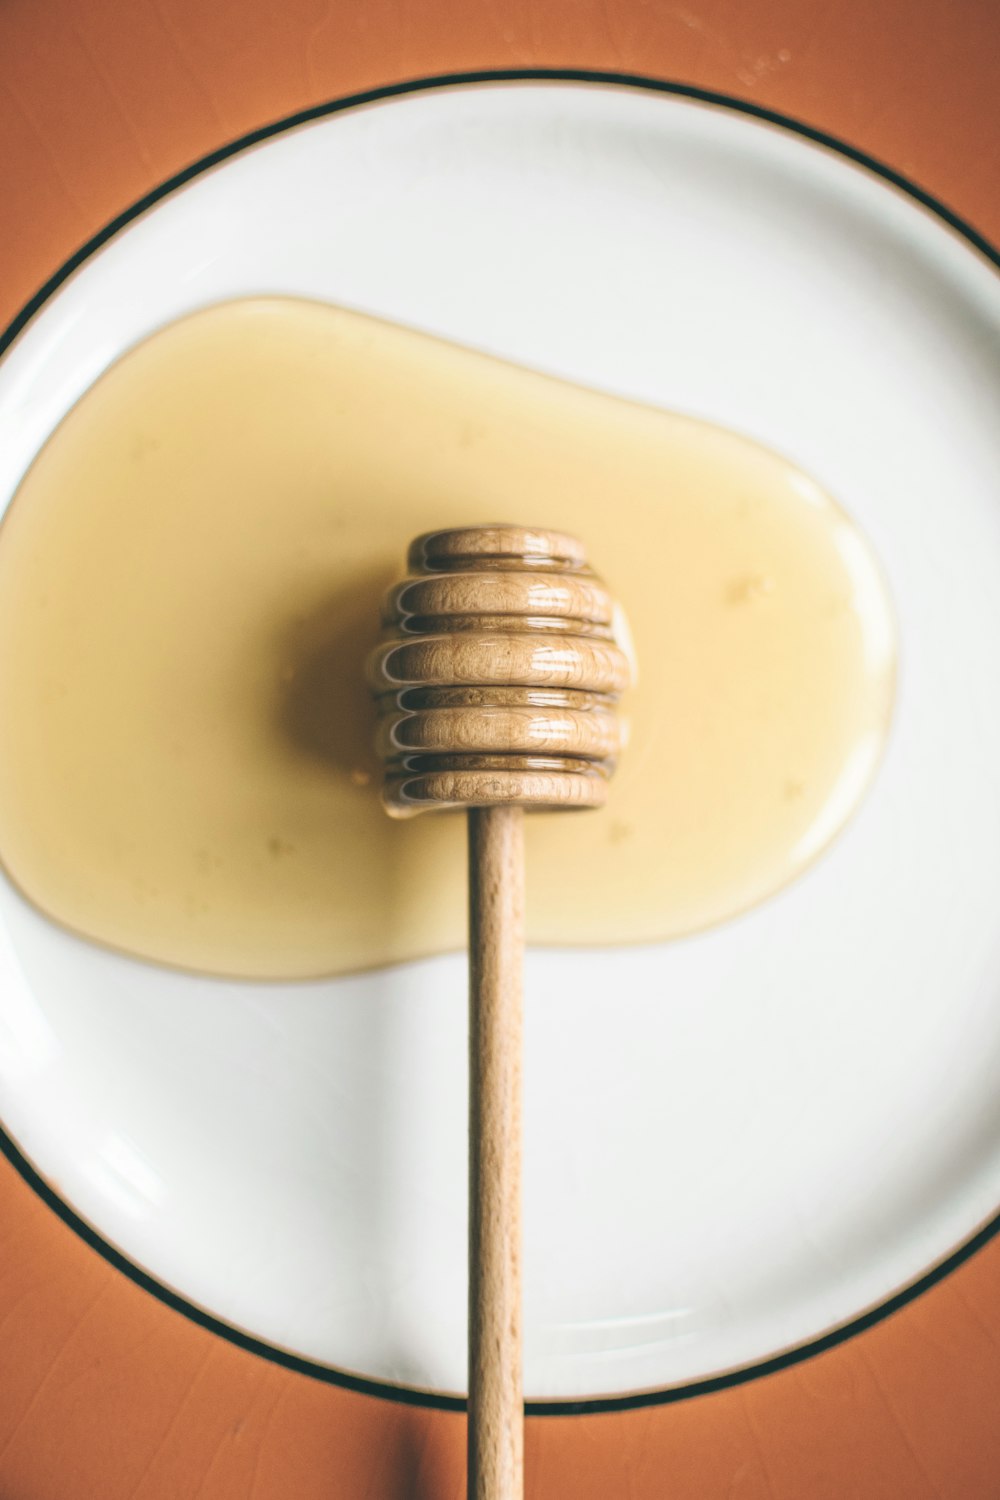 Dipper de mel em placa redonda com mel